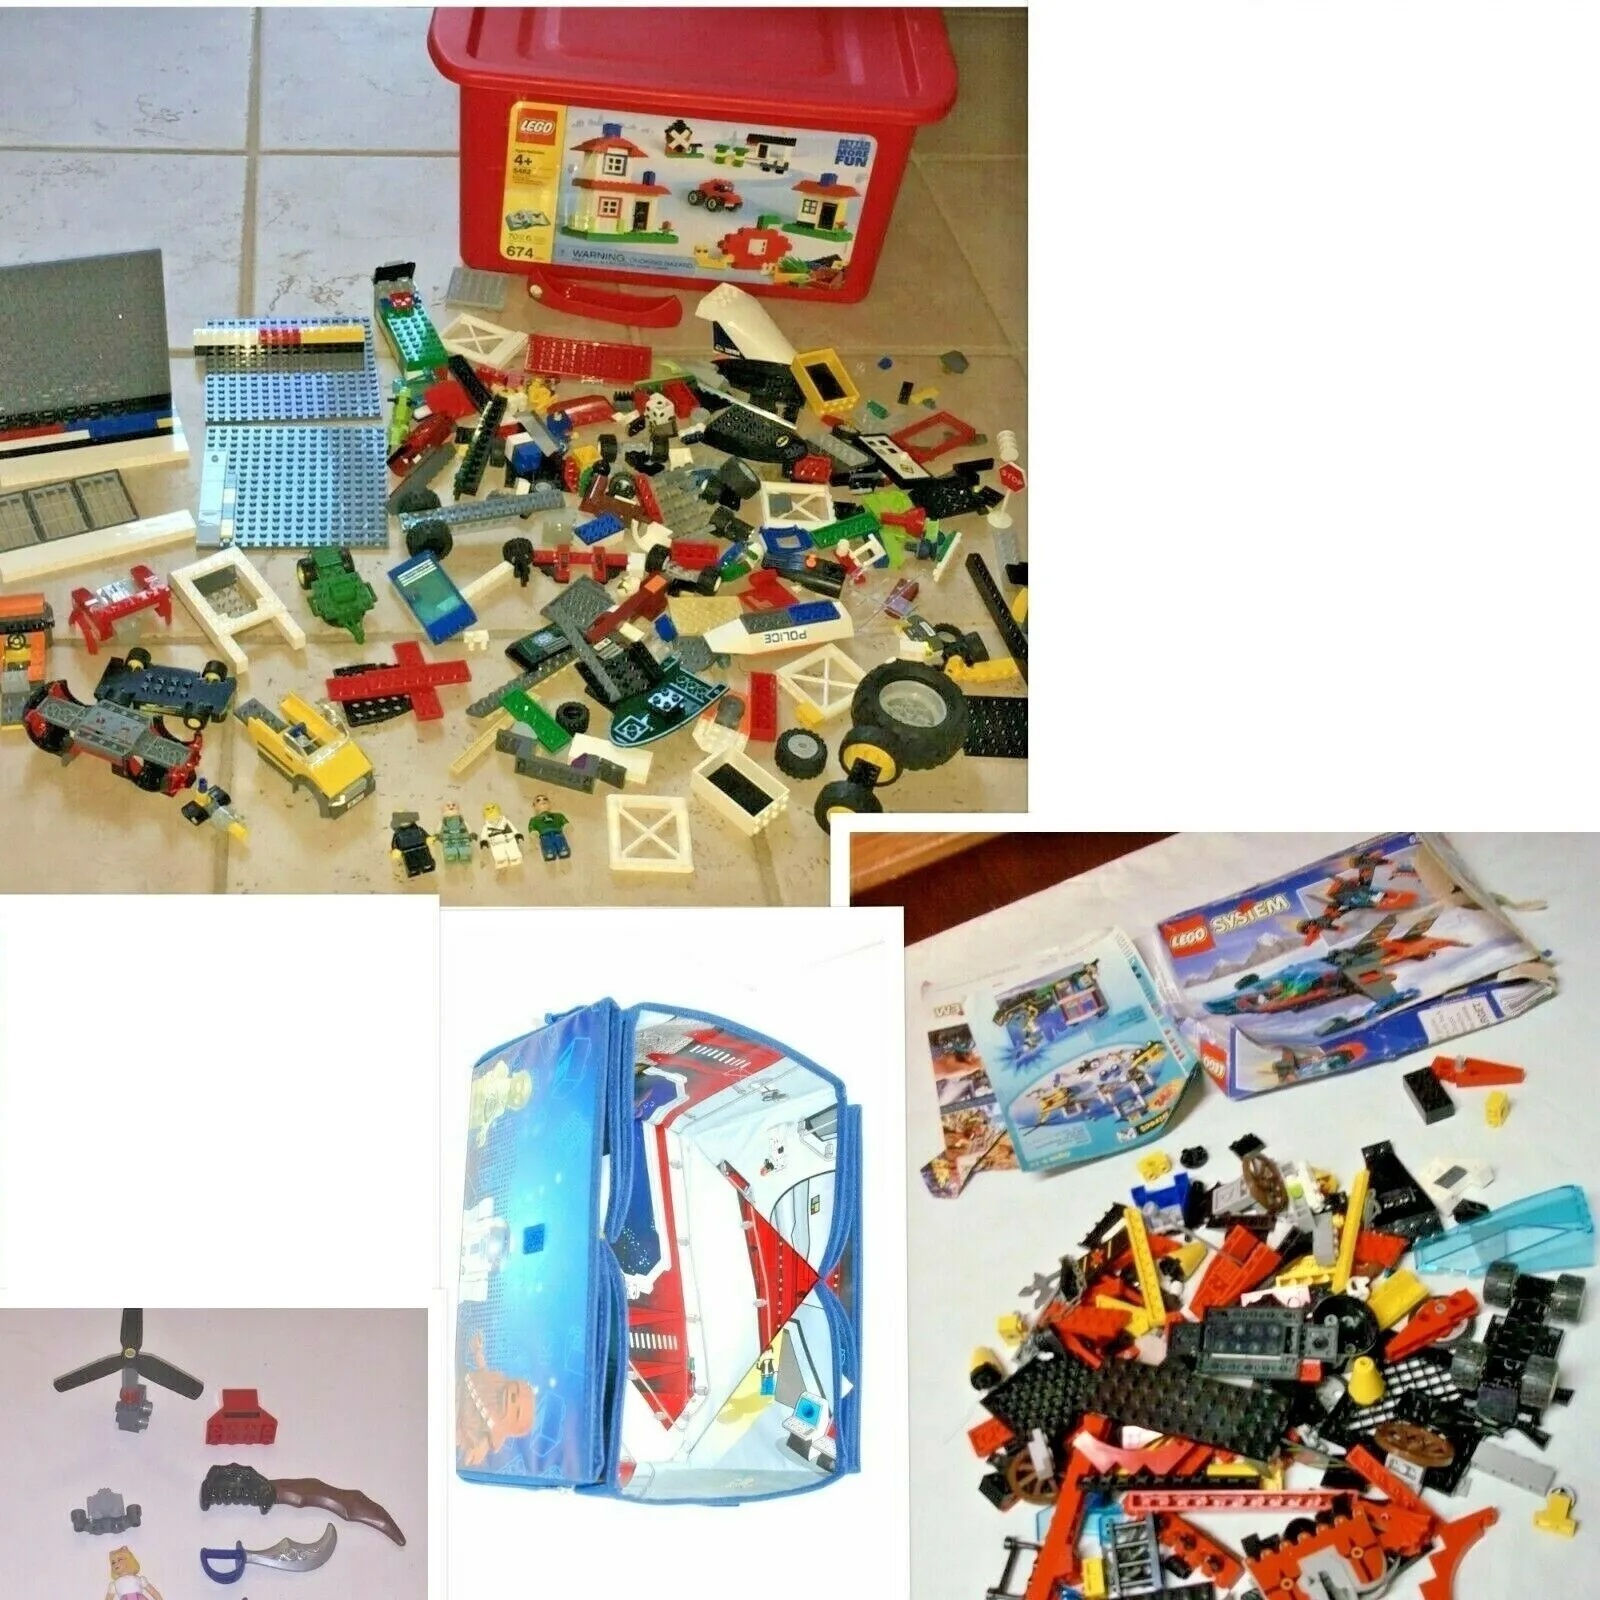 Lego Star Wars Bin & Brickmaster Red tub & HUGE Lot of LEGOS & Figures + More - $59.99